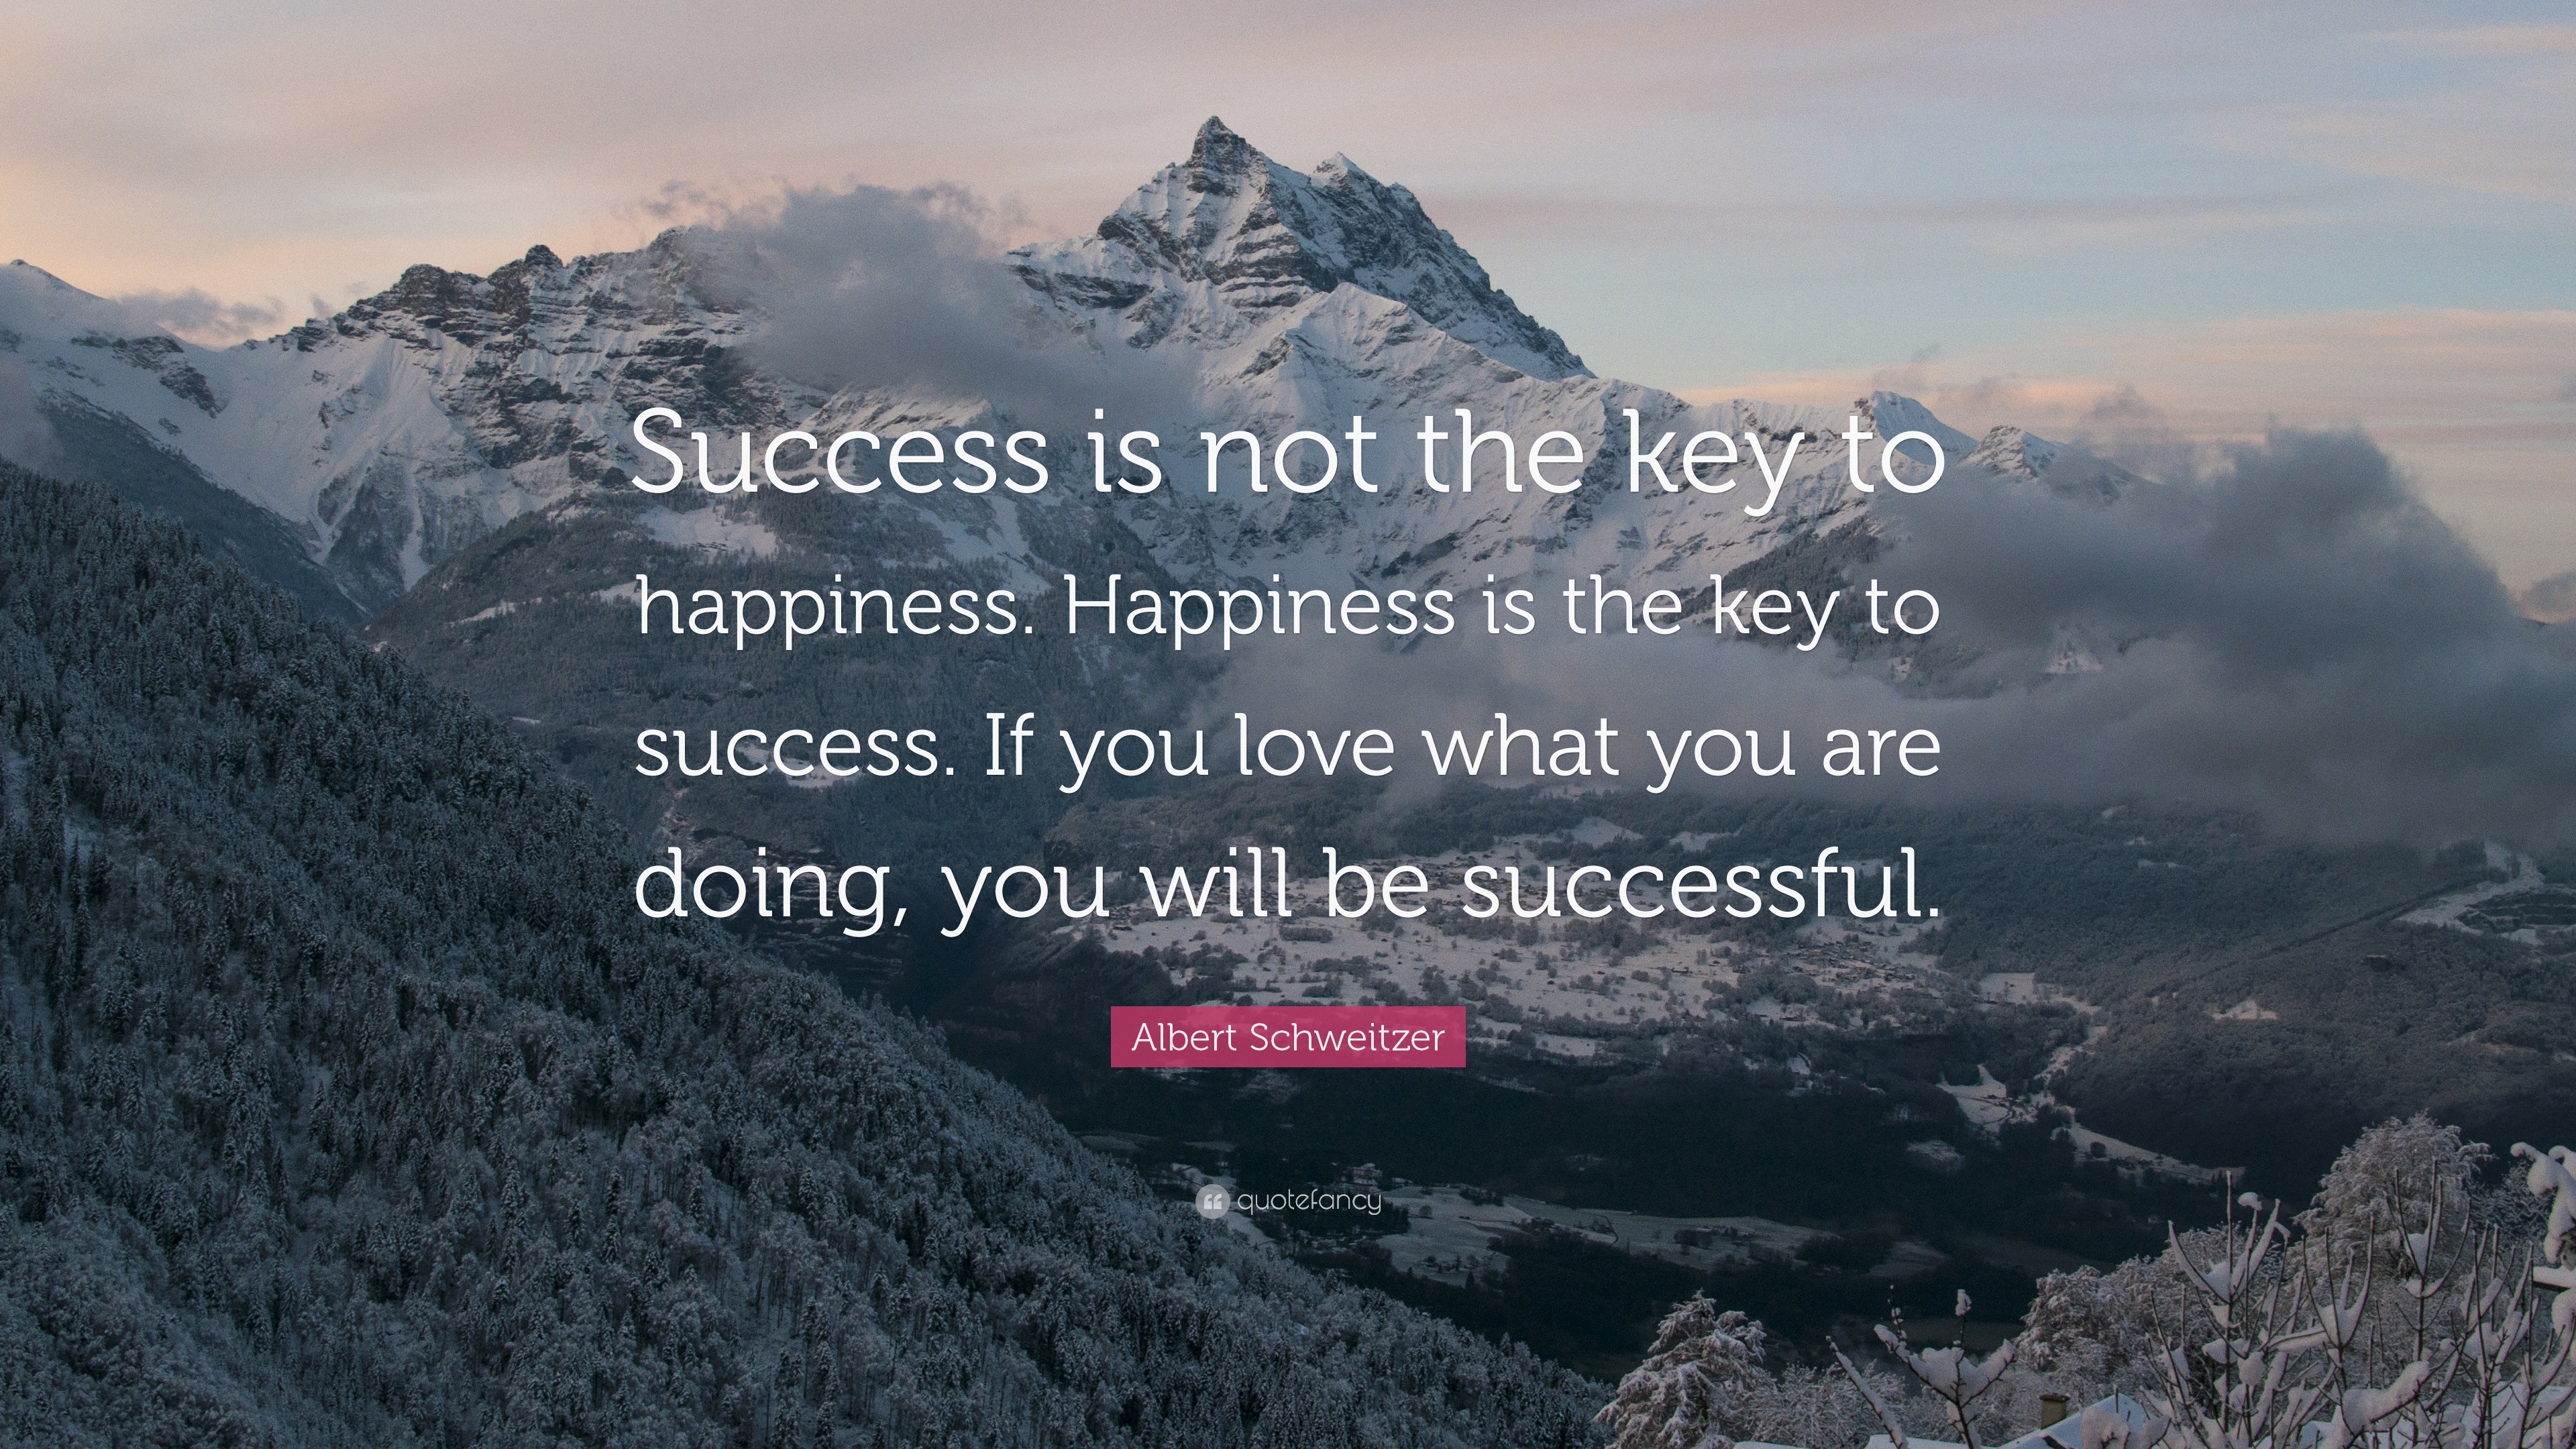 Albert Schweitzer Quote “Success is not the key to happiness